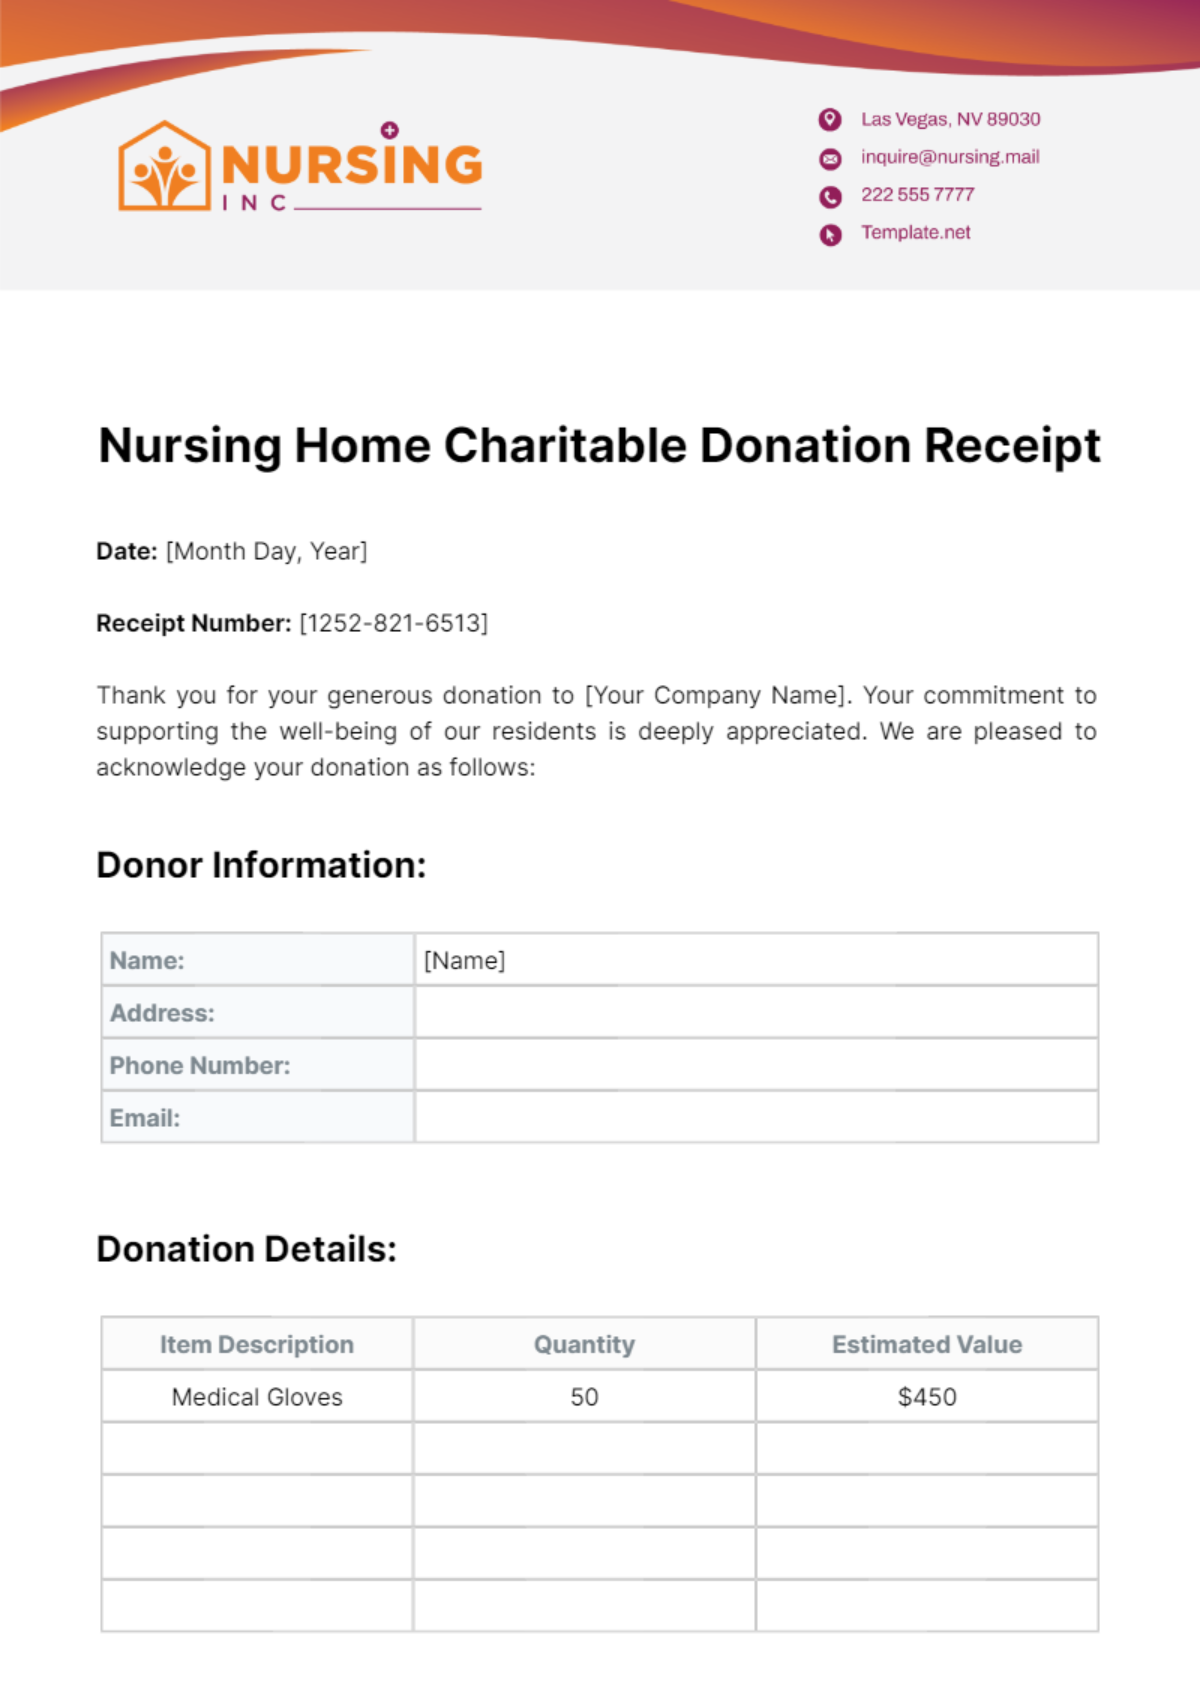 Nursing Home Charitable Donation Receipt Template